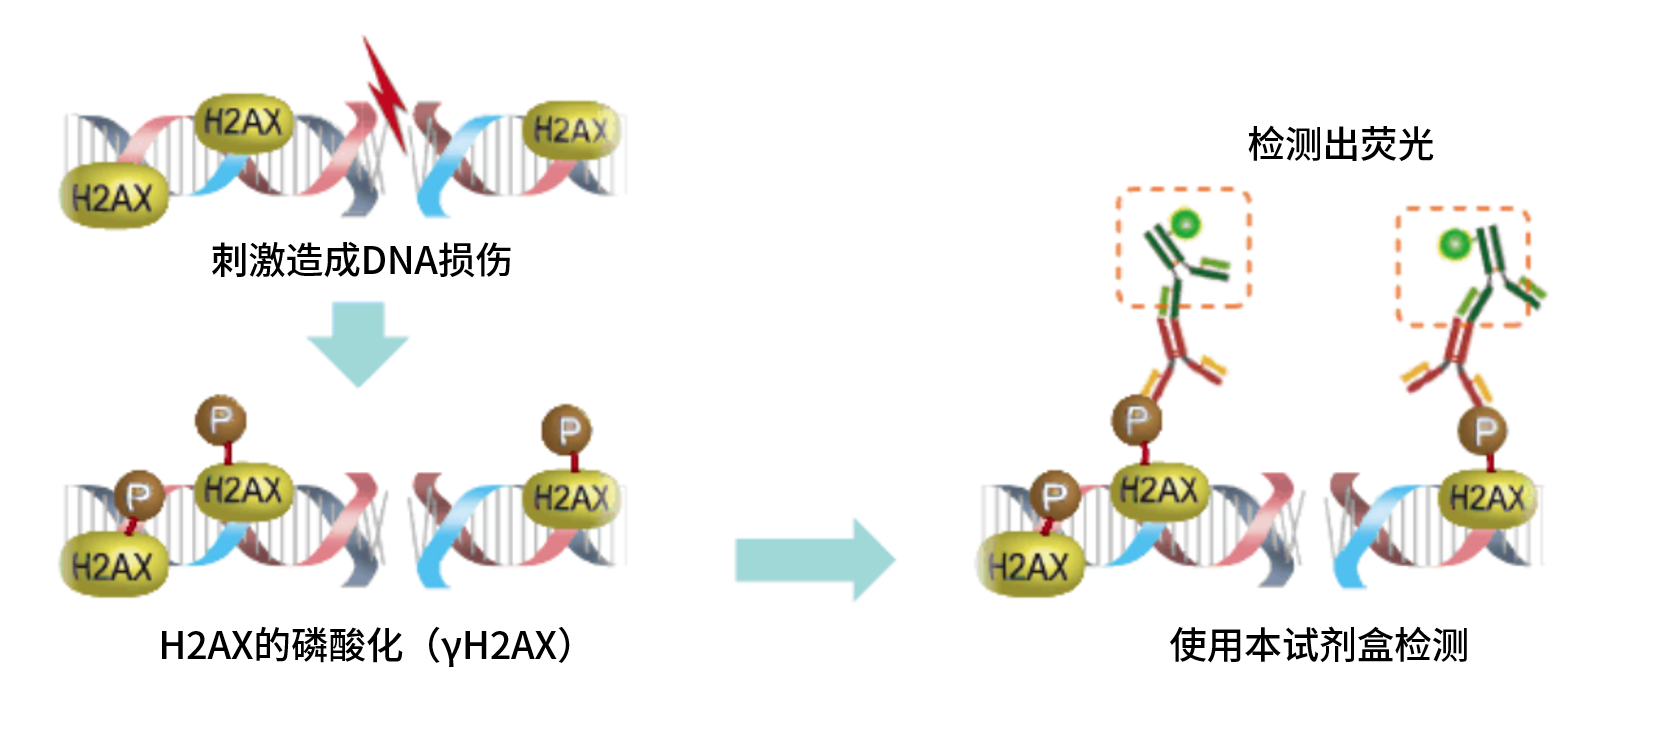 DNA Damage Detection Kit &#8211; γH2AX　- Deep Red货号：G267